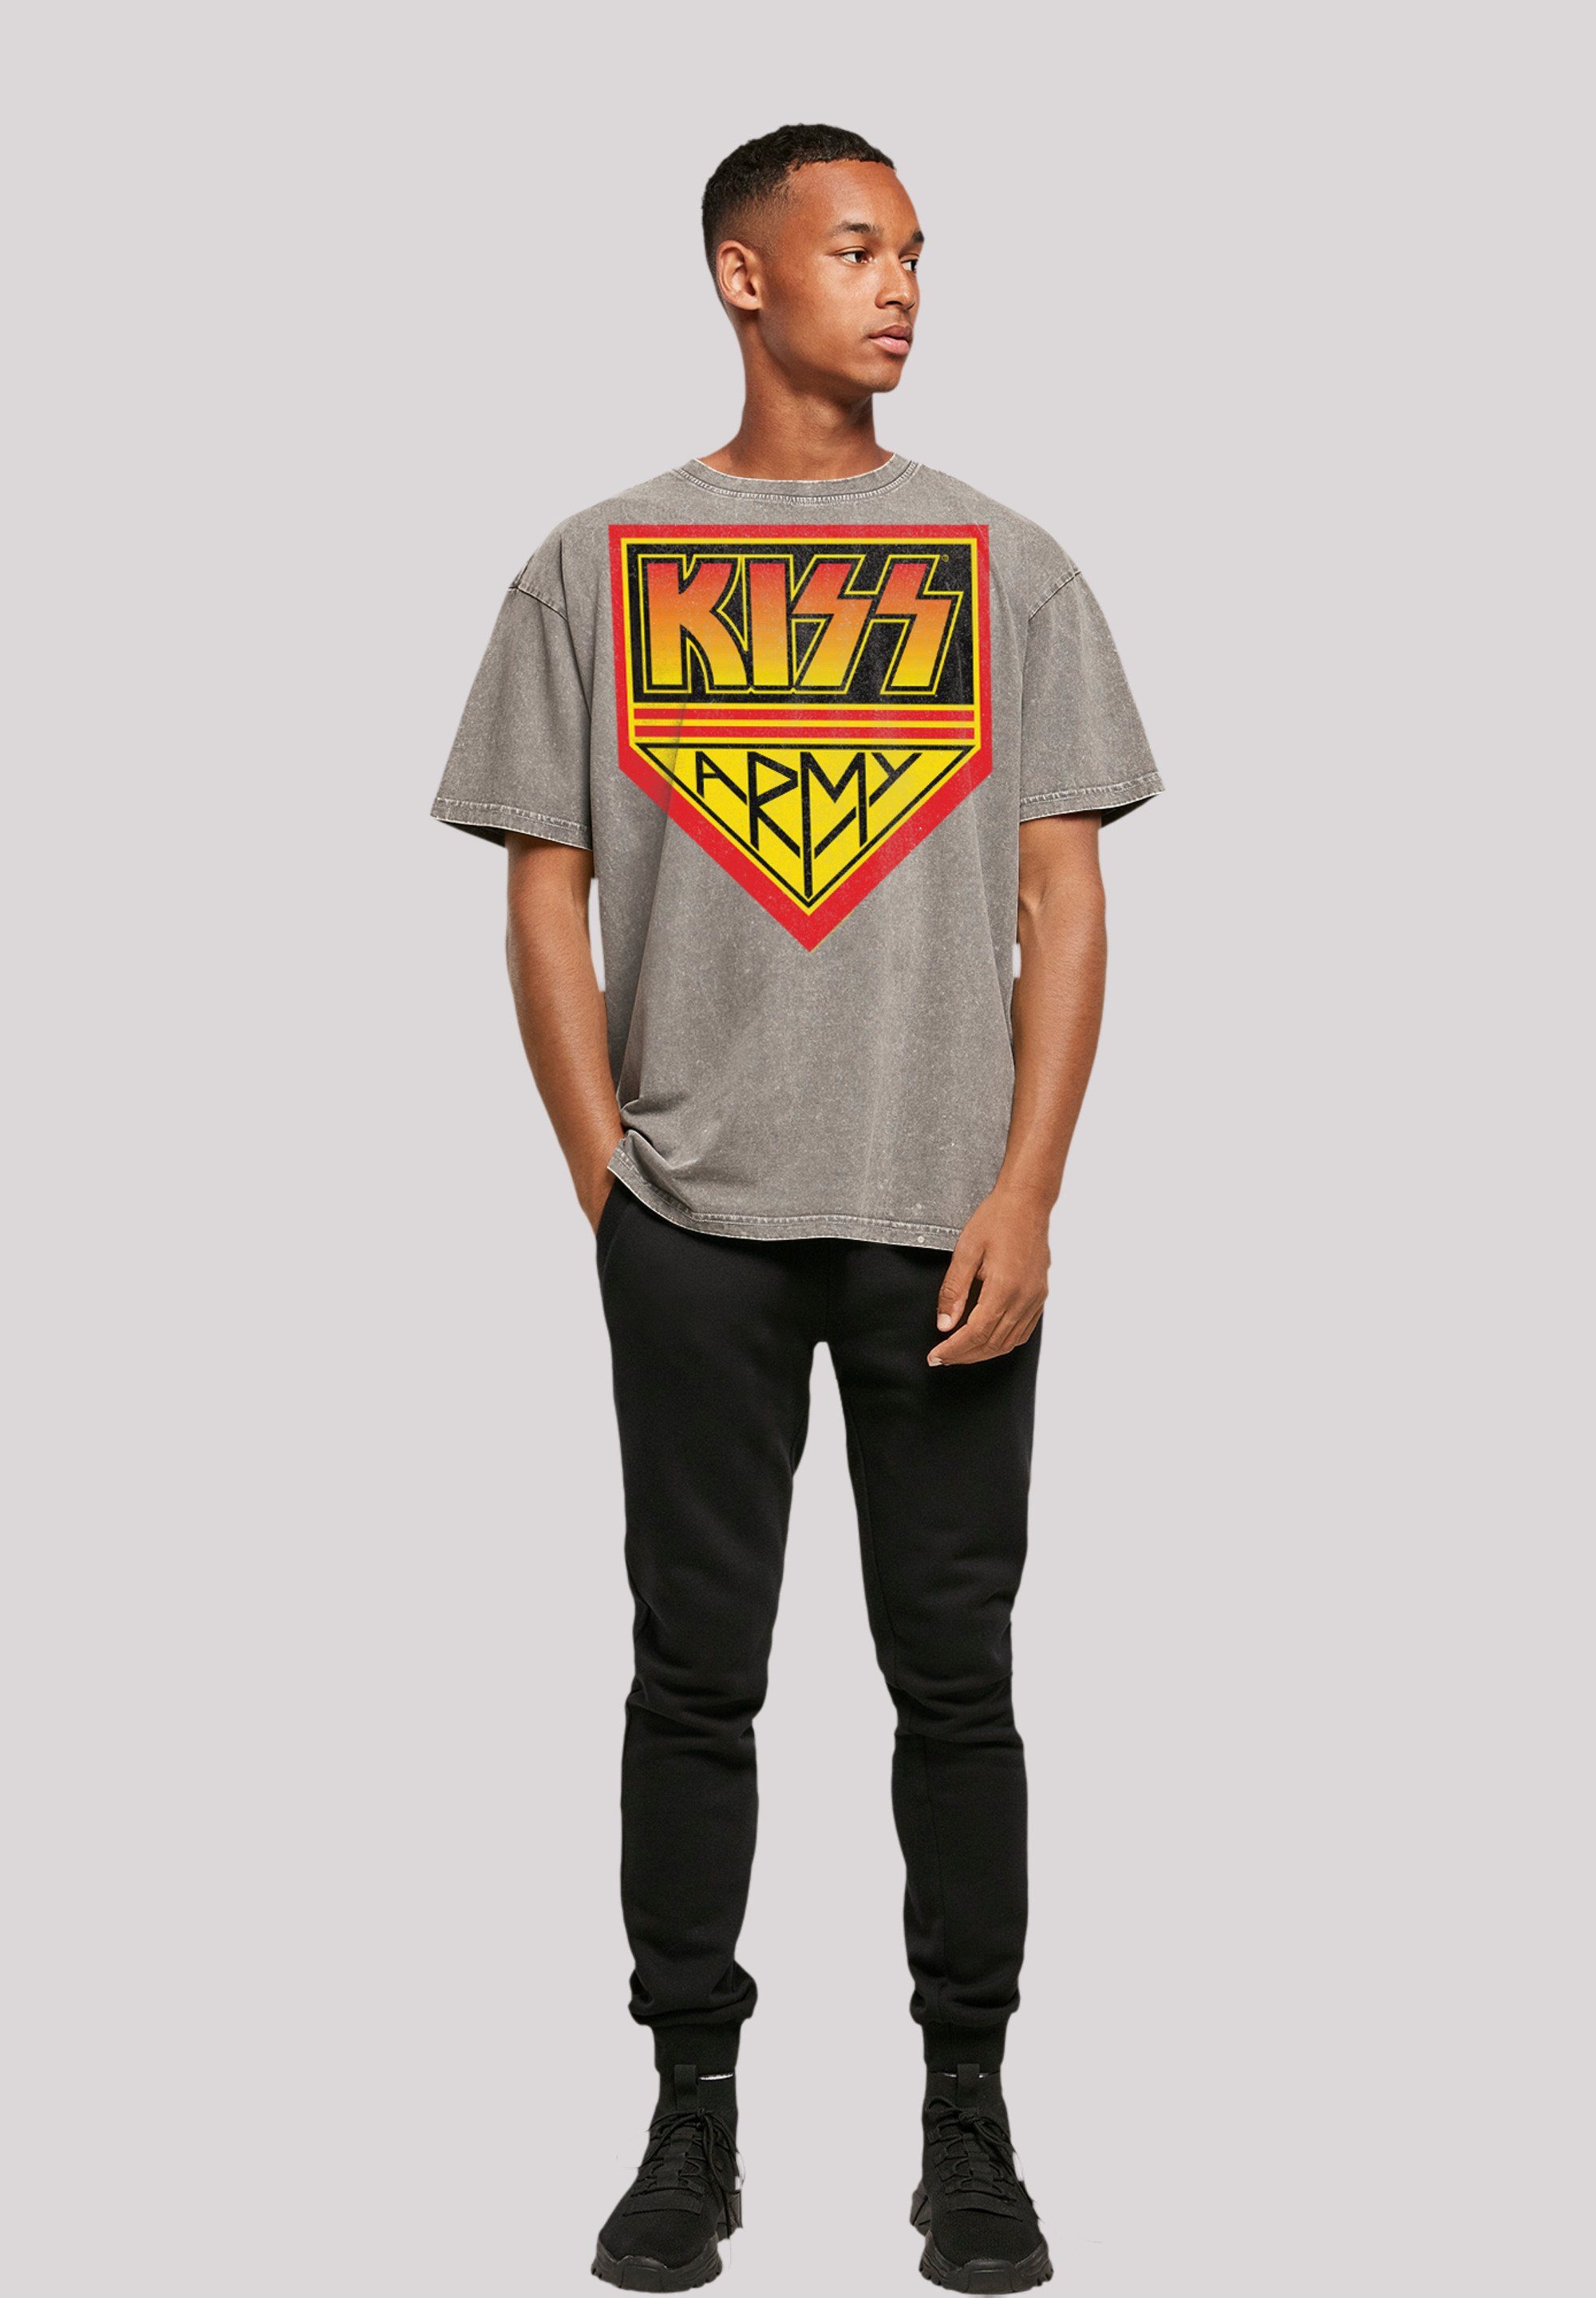 T-Shirt Asphalt Musik, Rock Army Qualität, Logo By Kiss Premium Band F4NT4STIC Rock Off